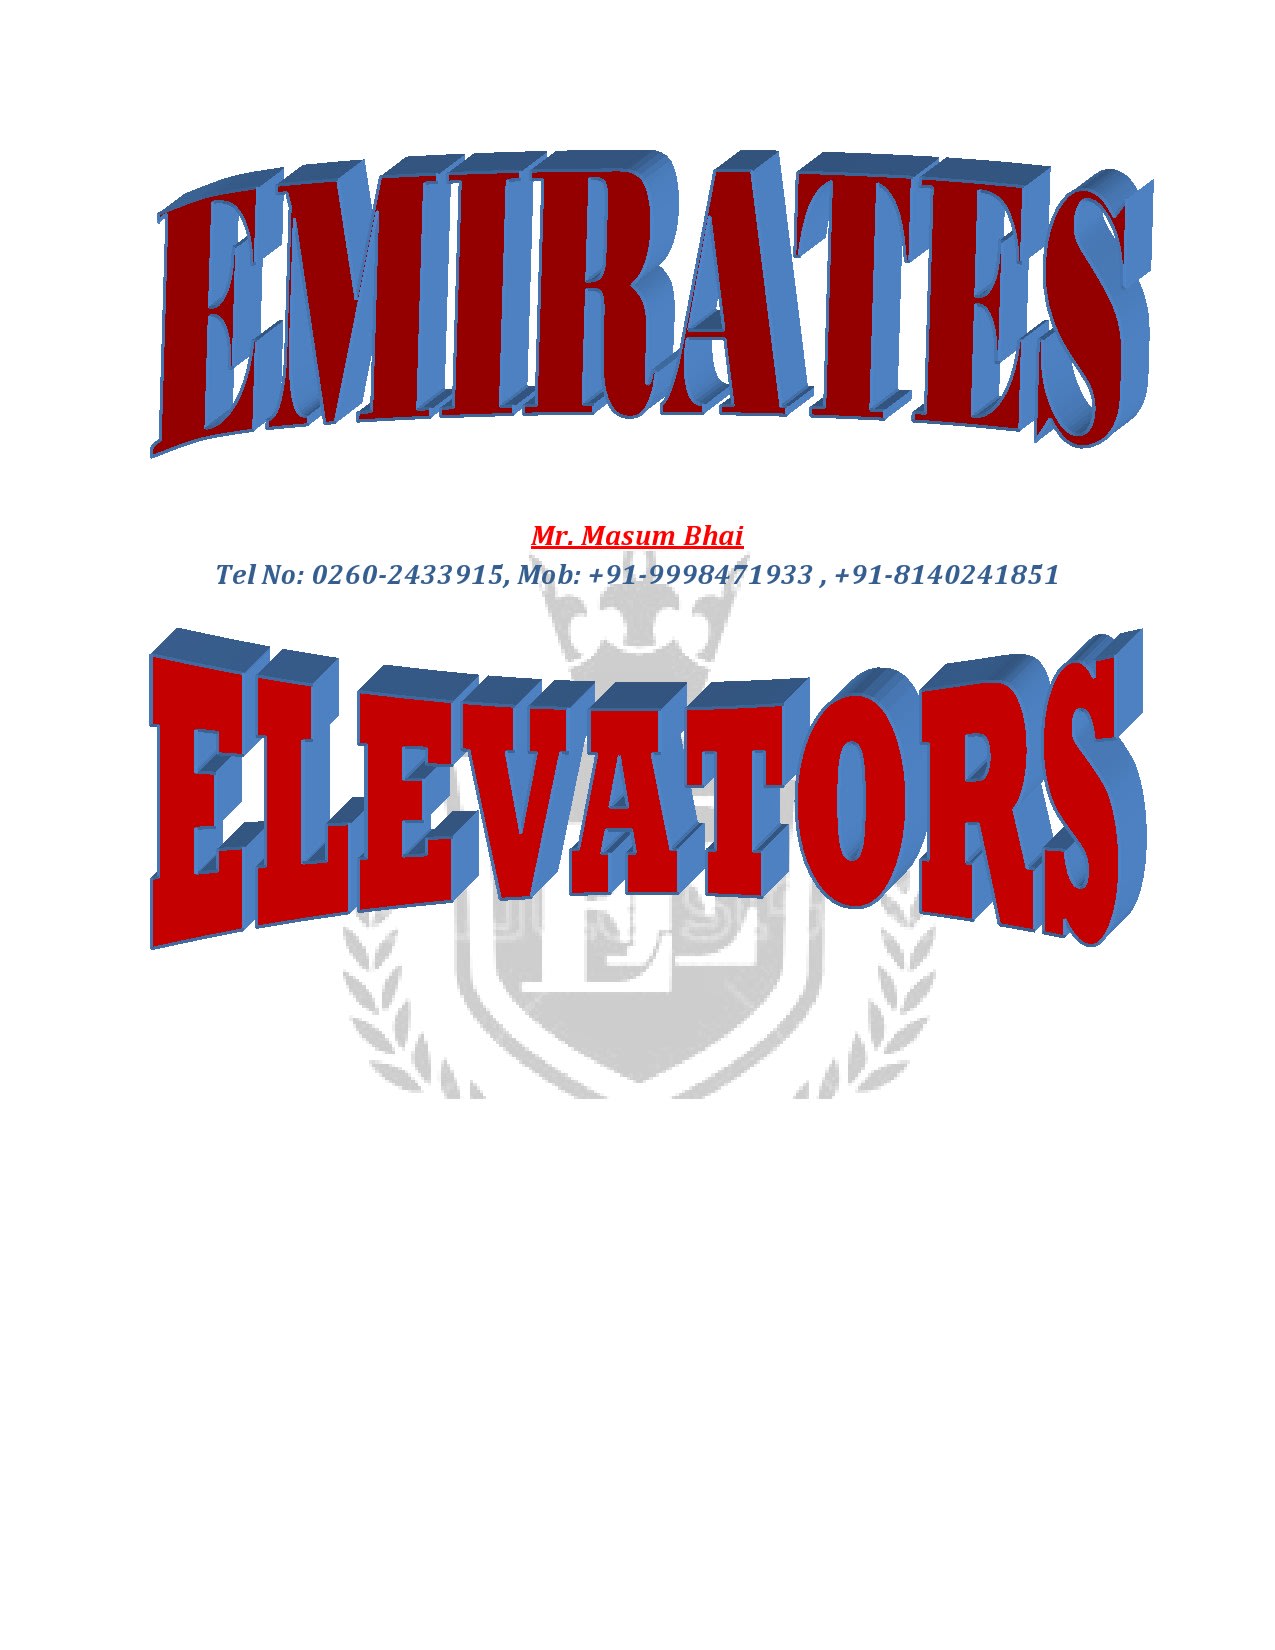 Emirates Elevators